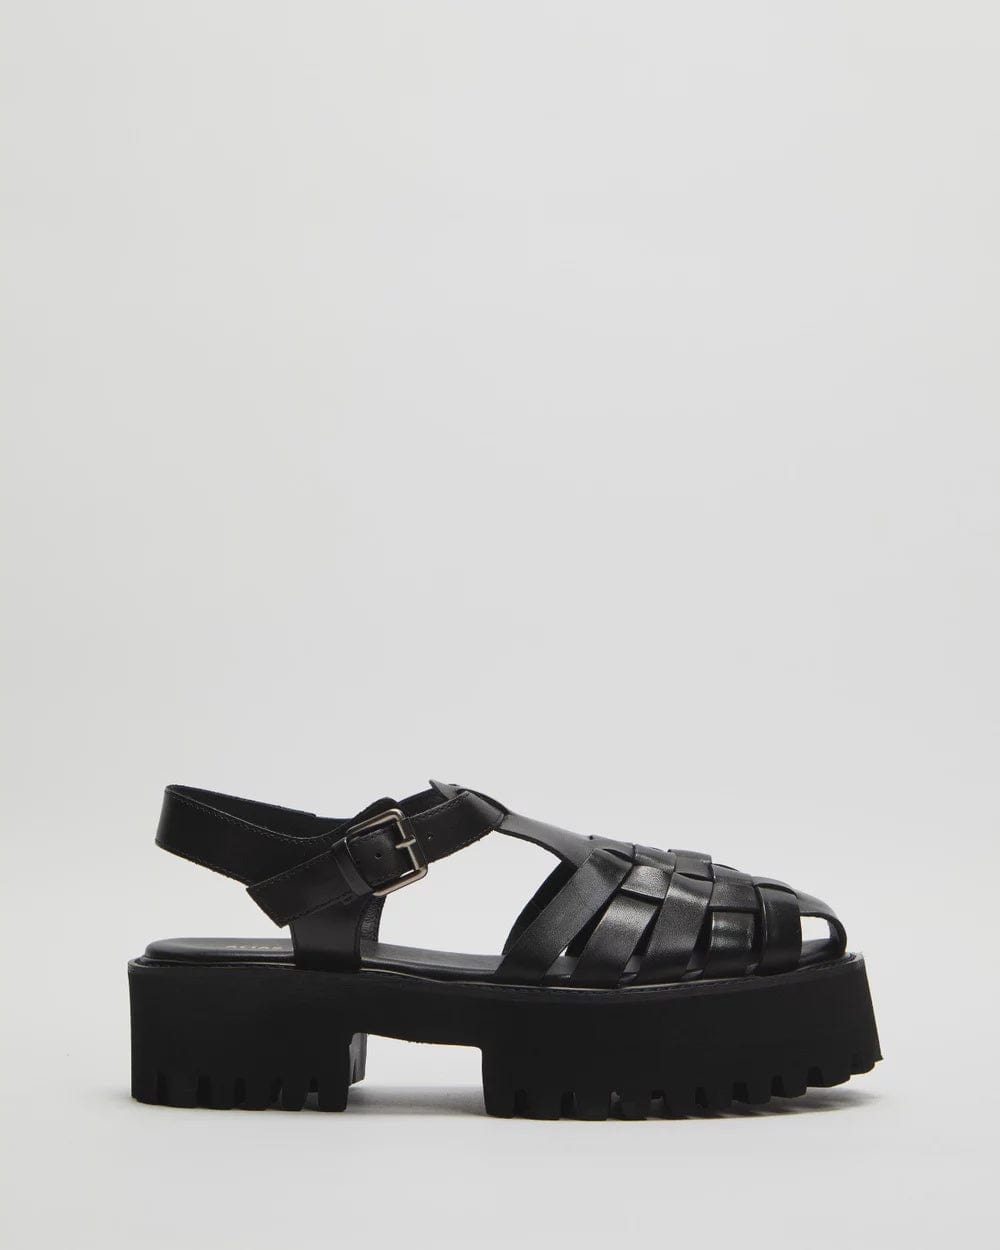 Alias Mae Footwear Alias Mae | Quince Sandals - Black